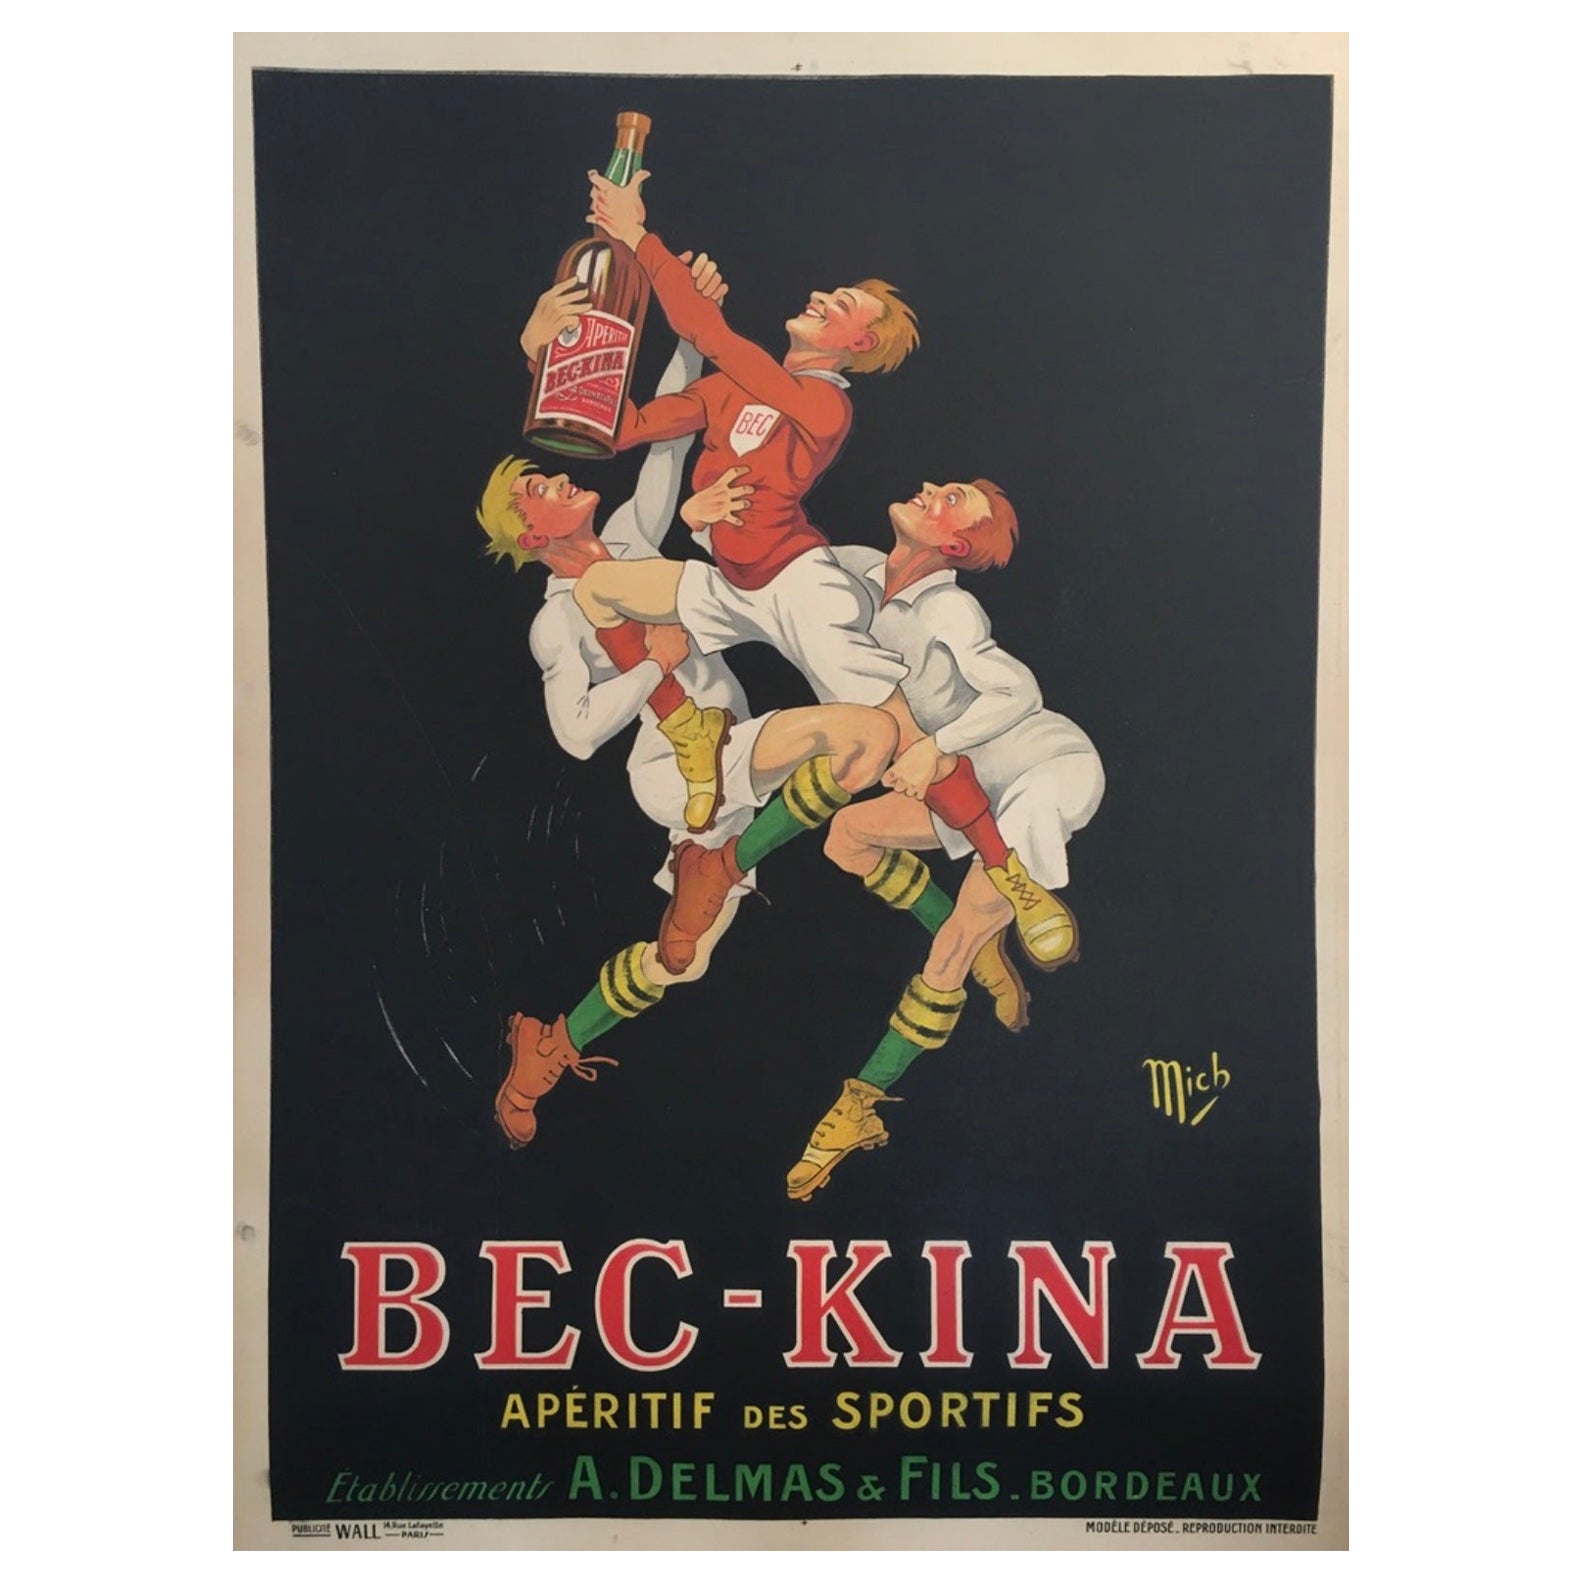 Original Vintage French Art Deco Poster, 'Bec Kina', Apéritif 1910 by Mich For Sale